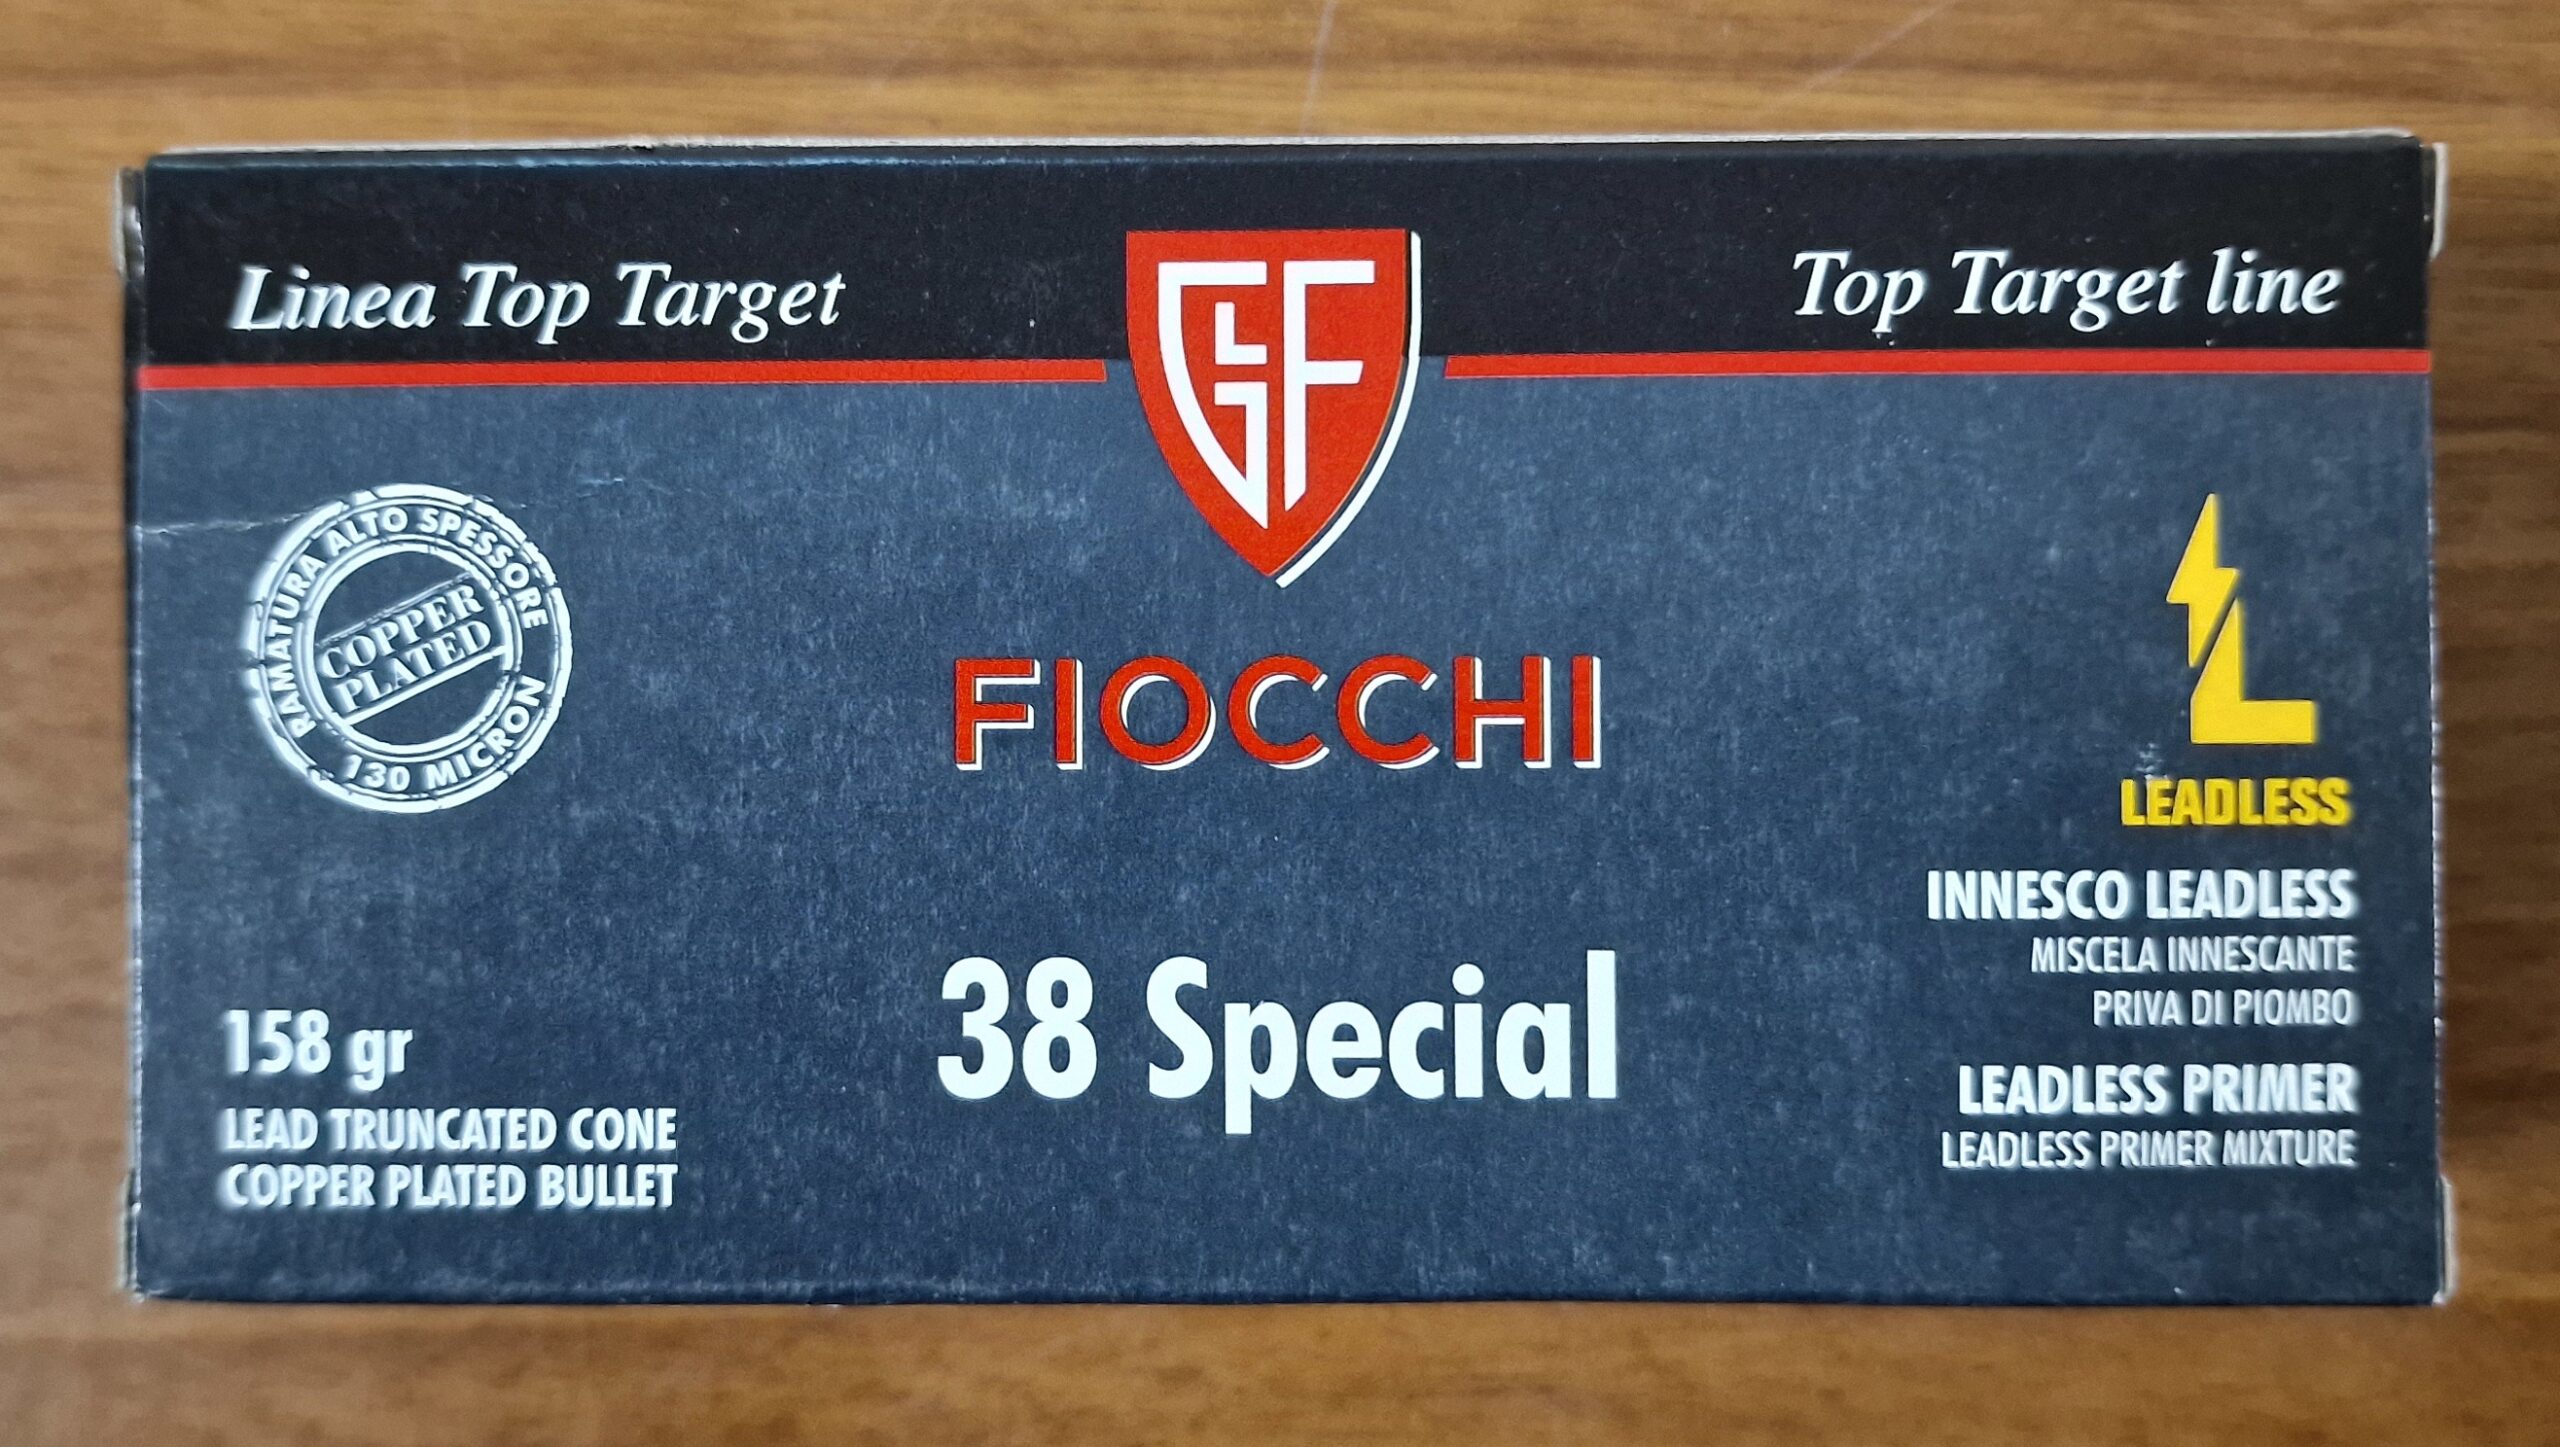 Fiocchi 38 special main image